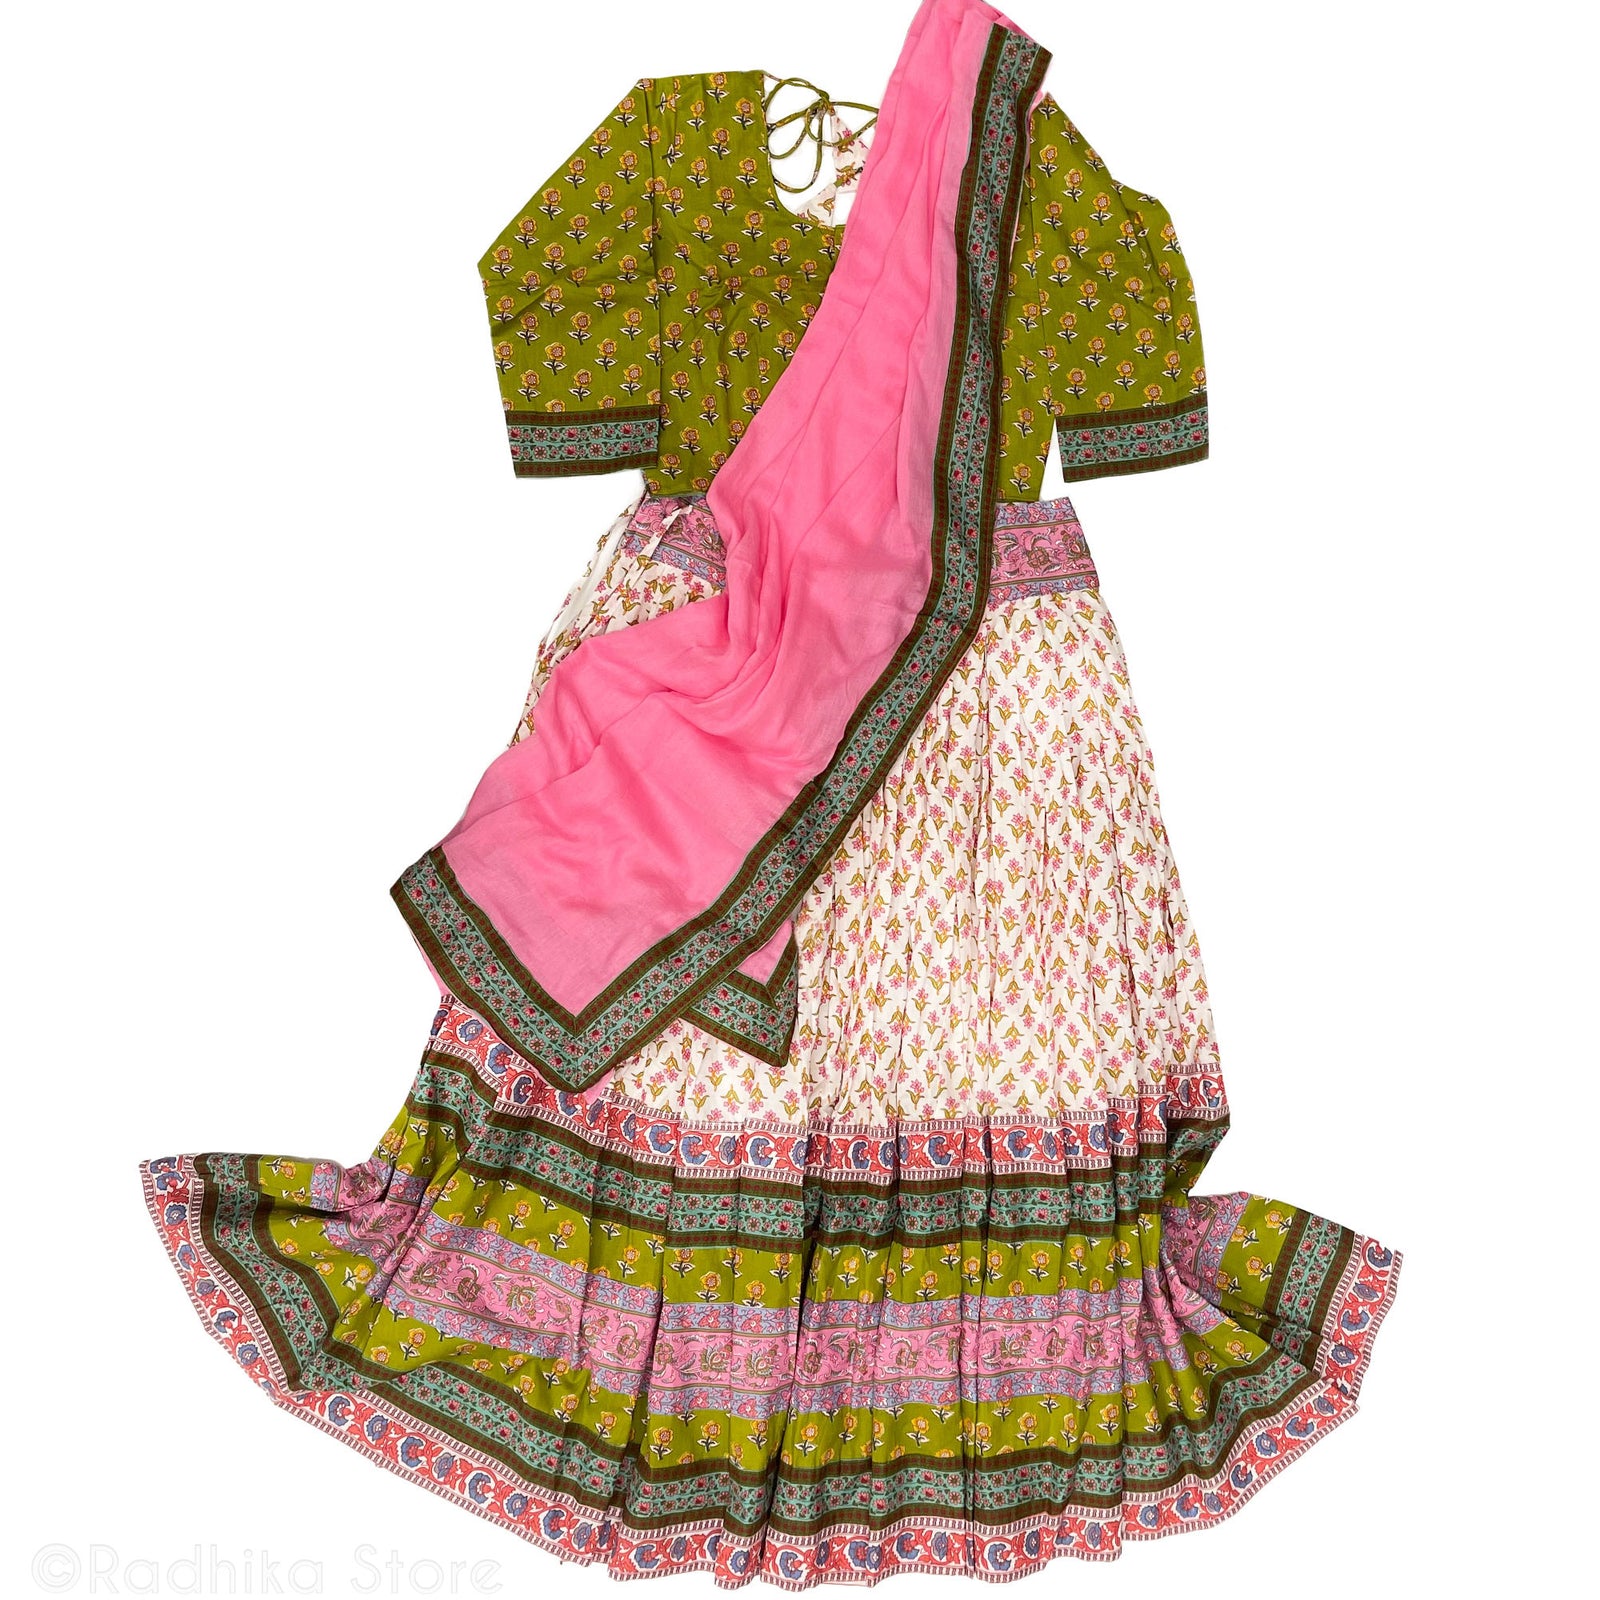 Gangotri's fresh classic gopi dress... - Gangotri Vrindavan | Facebook